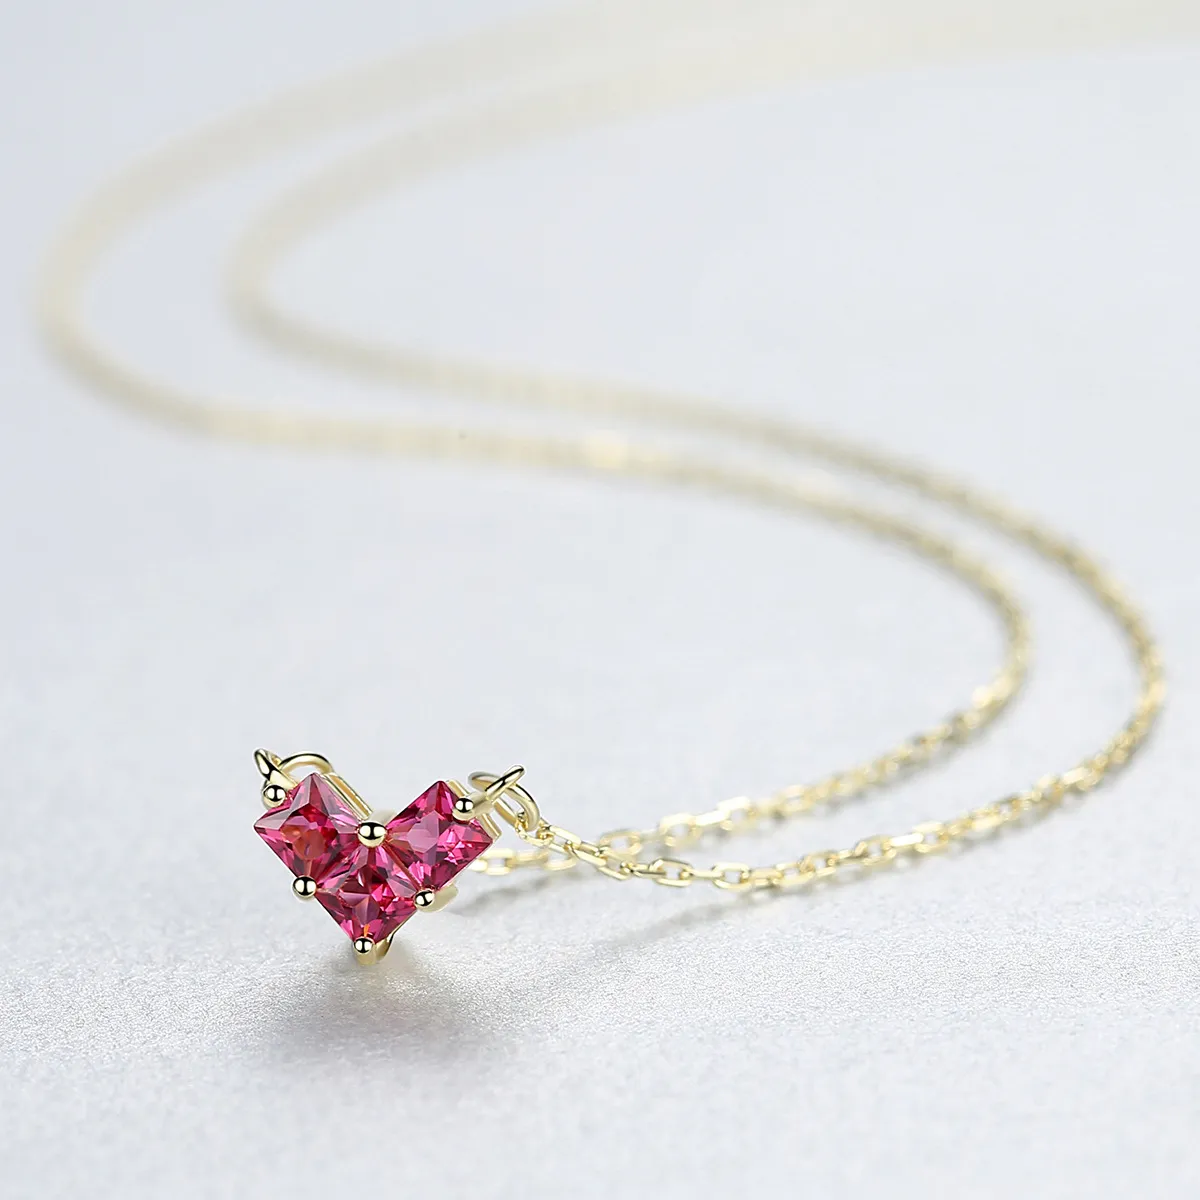 Pequeno delicado zirc￣o brilhante amor S925 Colar de pingente de prata Moda coreana Lady Lady Collar Chain Colar Colar Acess￳rio Presente